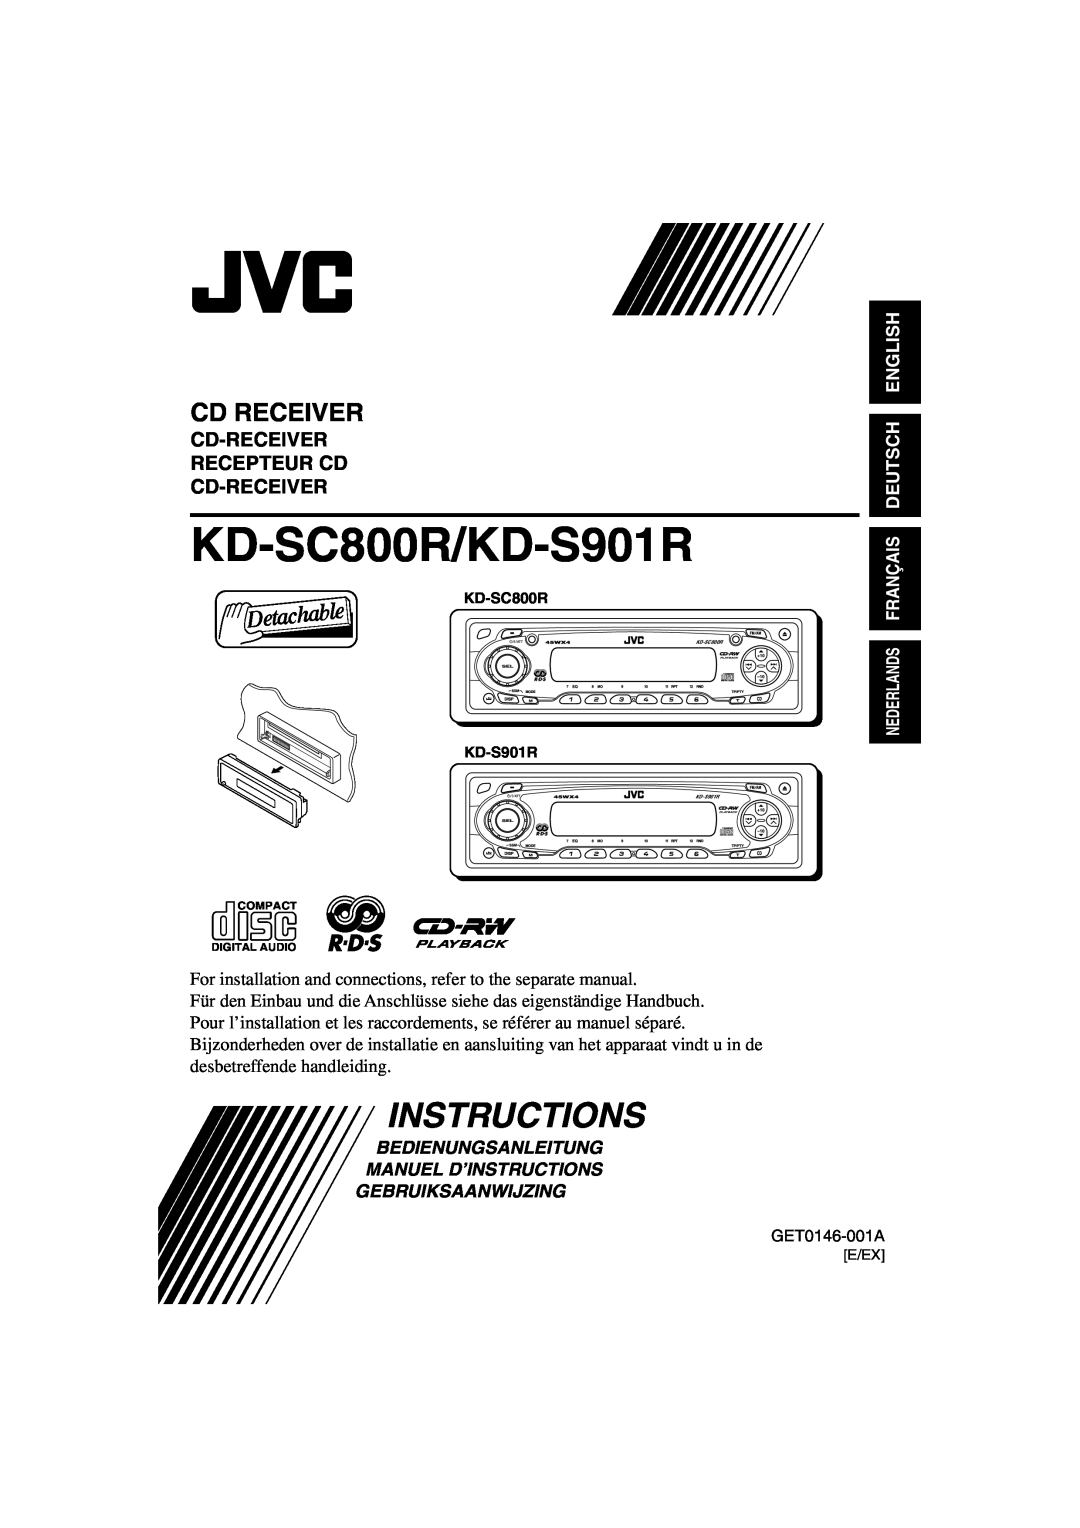 JVC manual Cd Receiver, Cd-Receiver Recepteur Cd Cd-Receiver, English Deutsch, KD-SC800R/KD-S901R, Instructions 